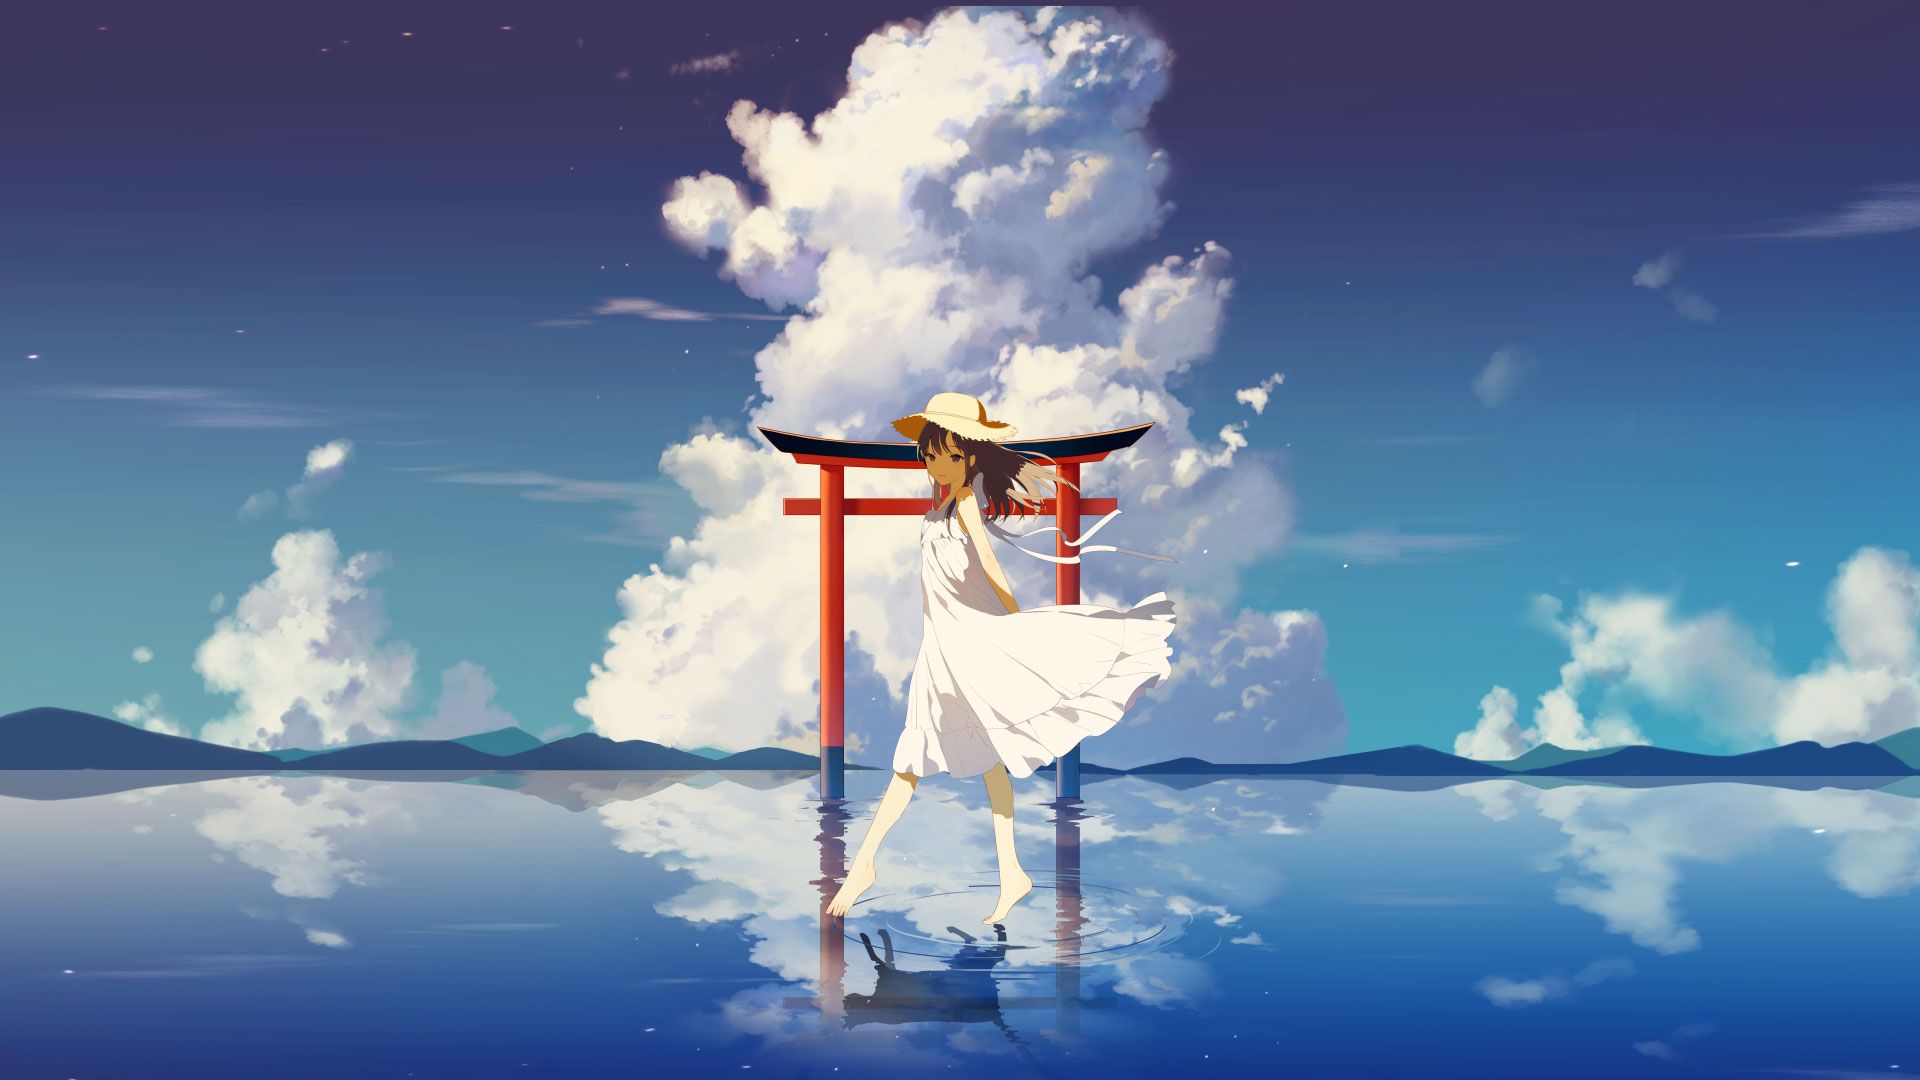 Anime Anime Girls Sky Reflection Dress White Dress Water Clouds Outdoors Barefoot 1920x1080 UHD Wallpaper. Walldump HD and UHD Wallpaper